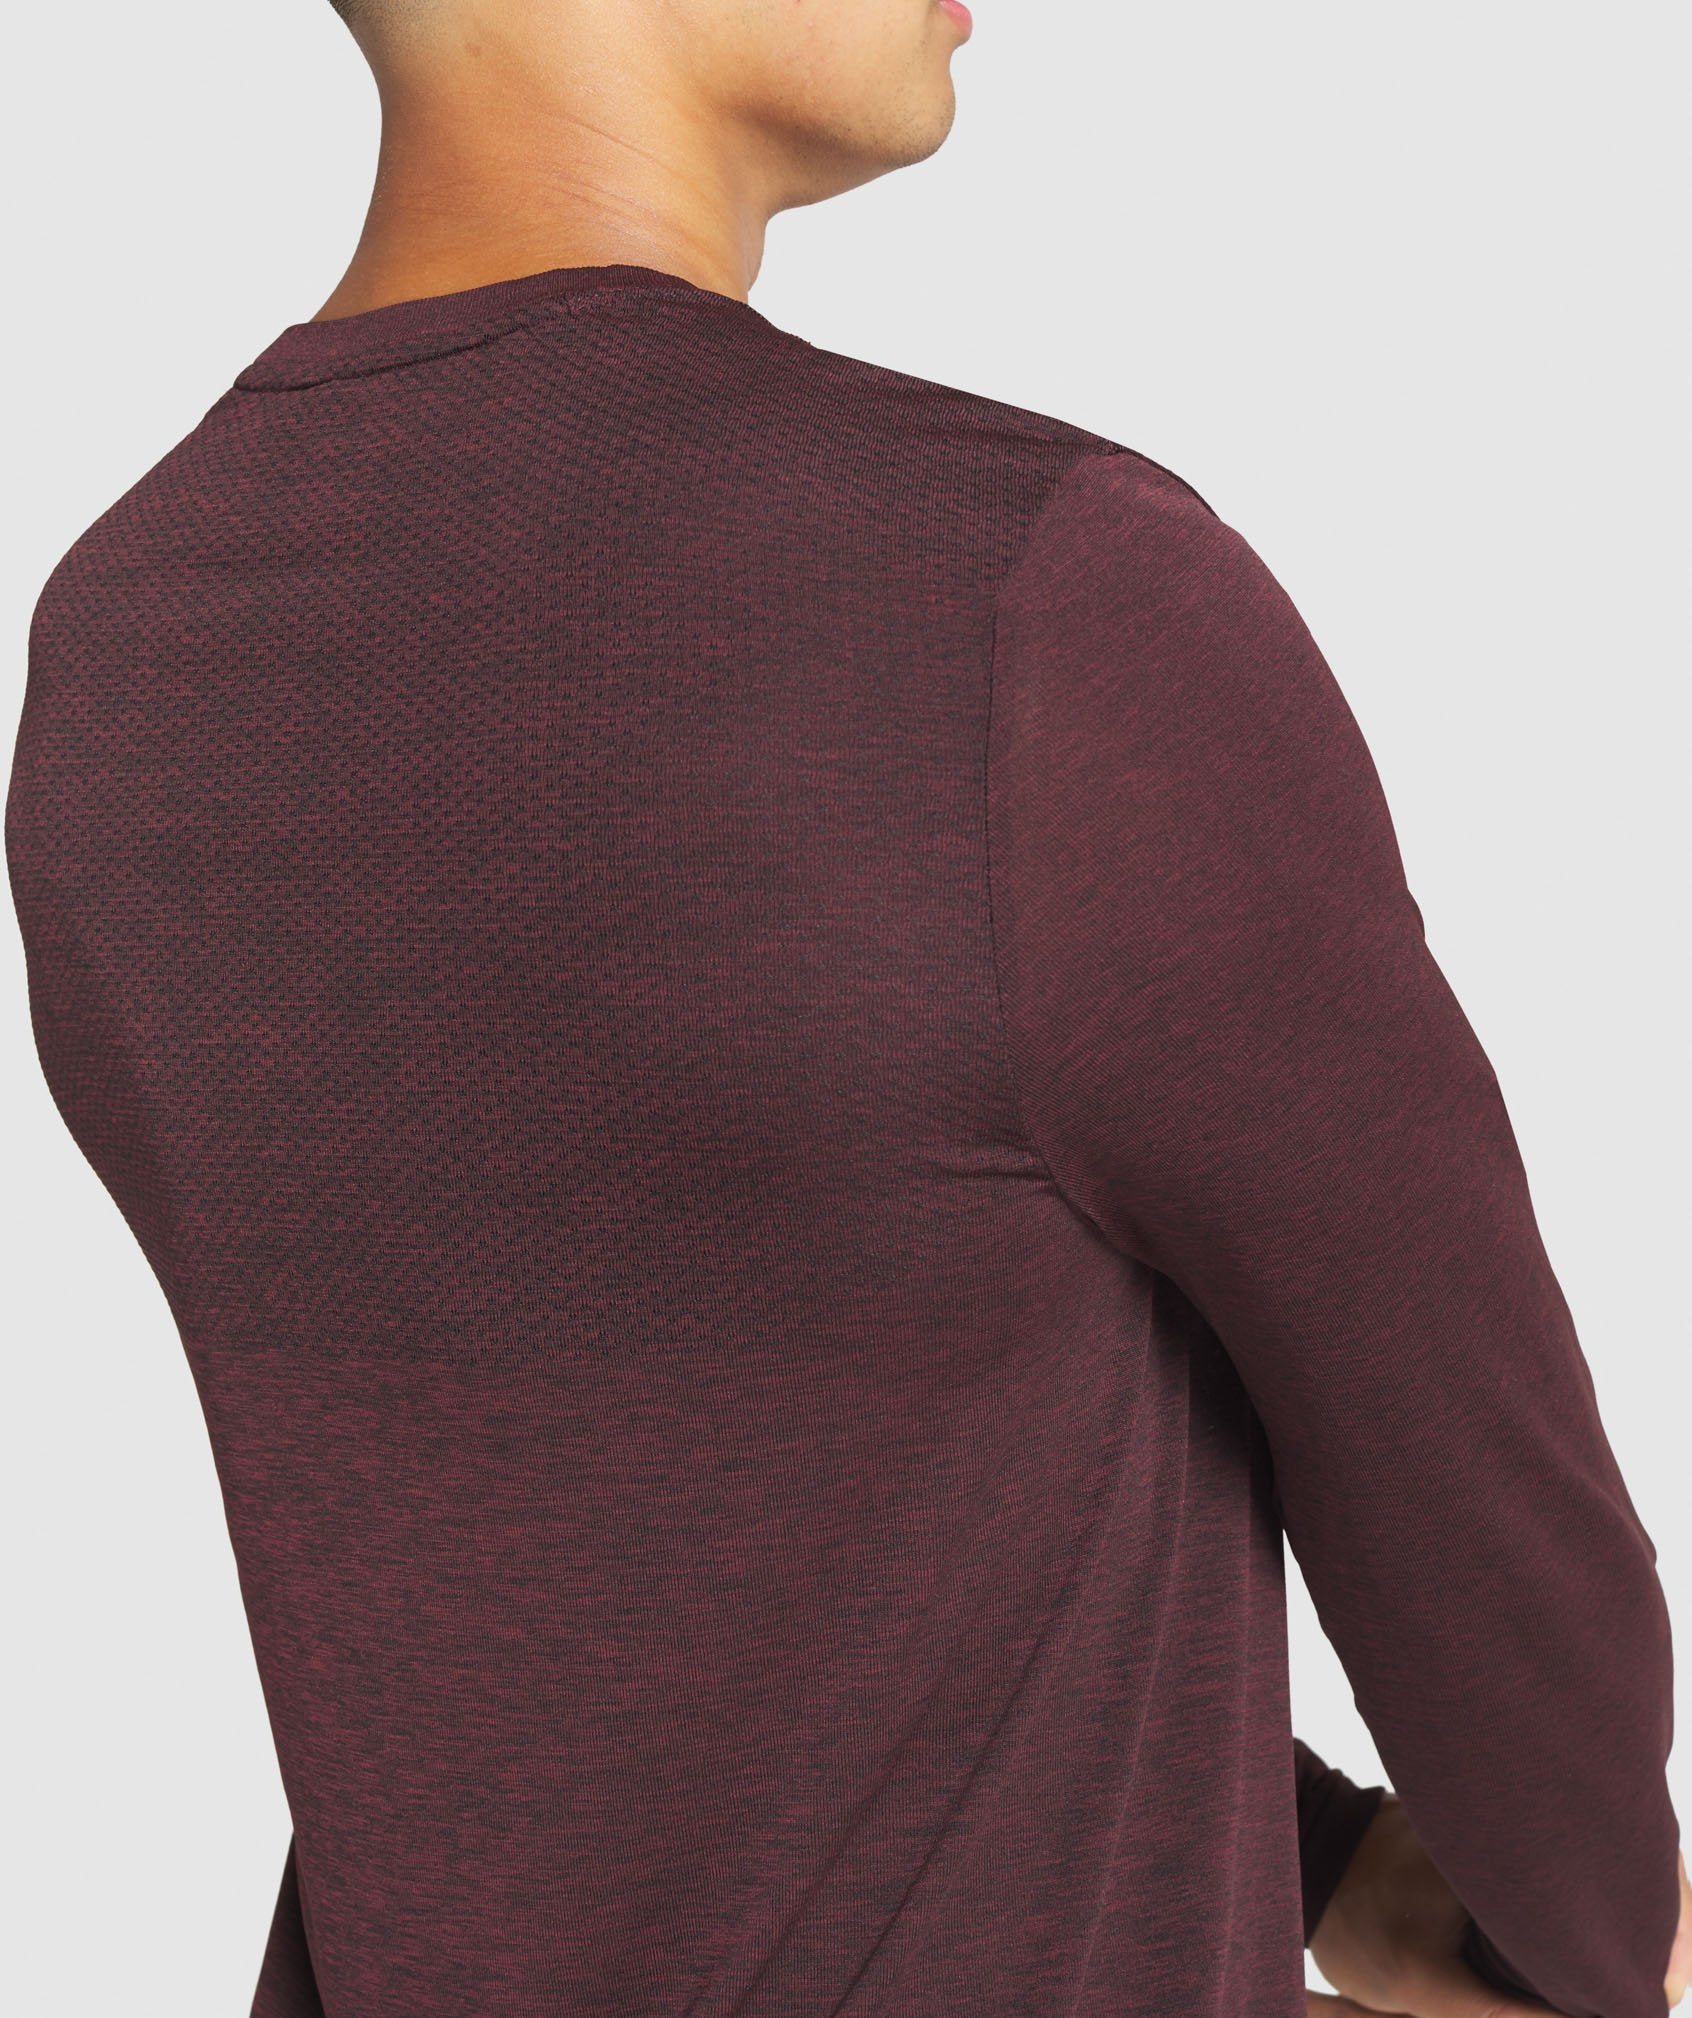 Vital Long Sleeve T-Shirt in Burgundy Marl